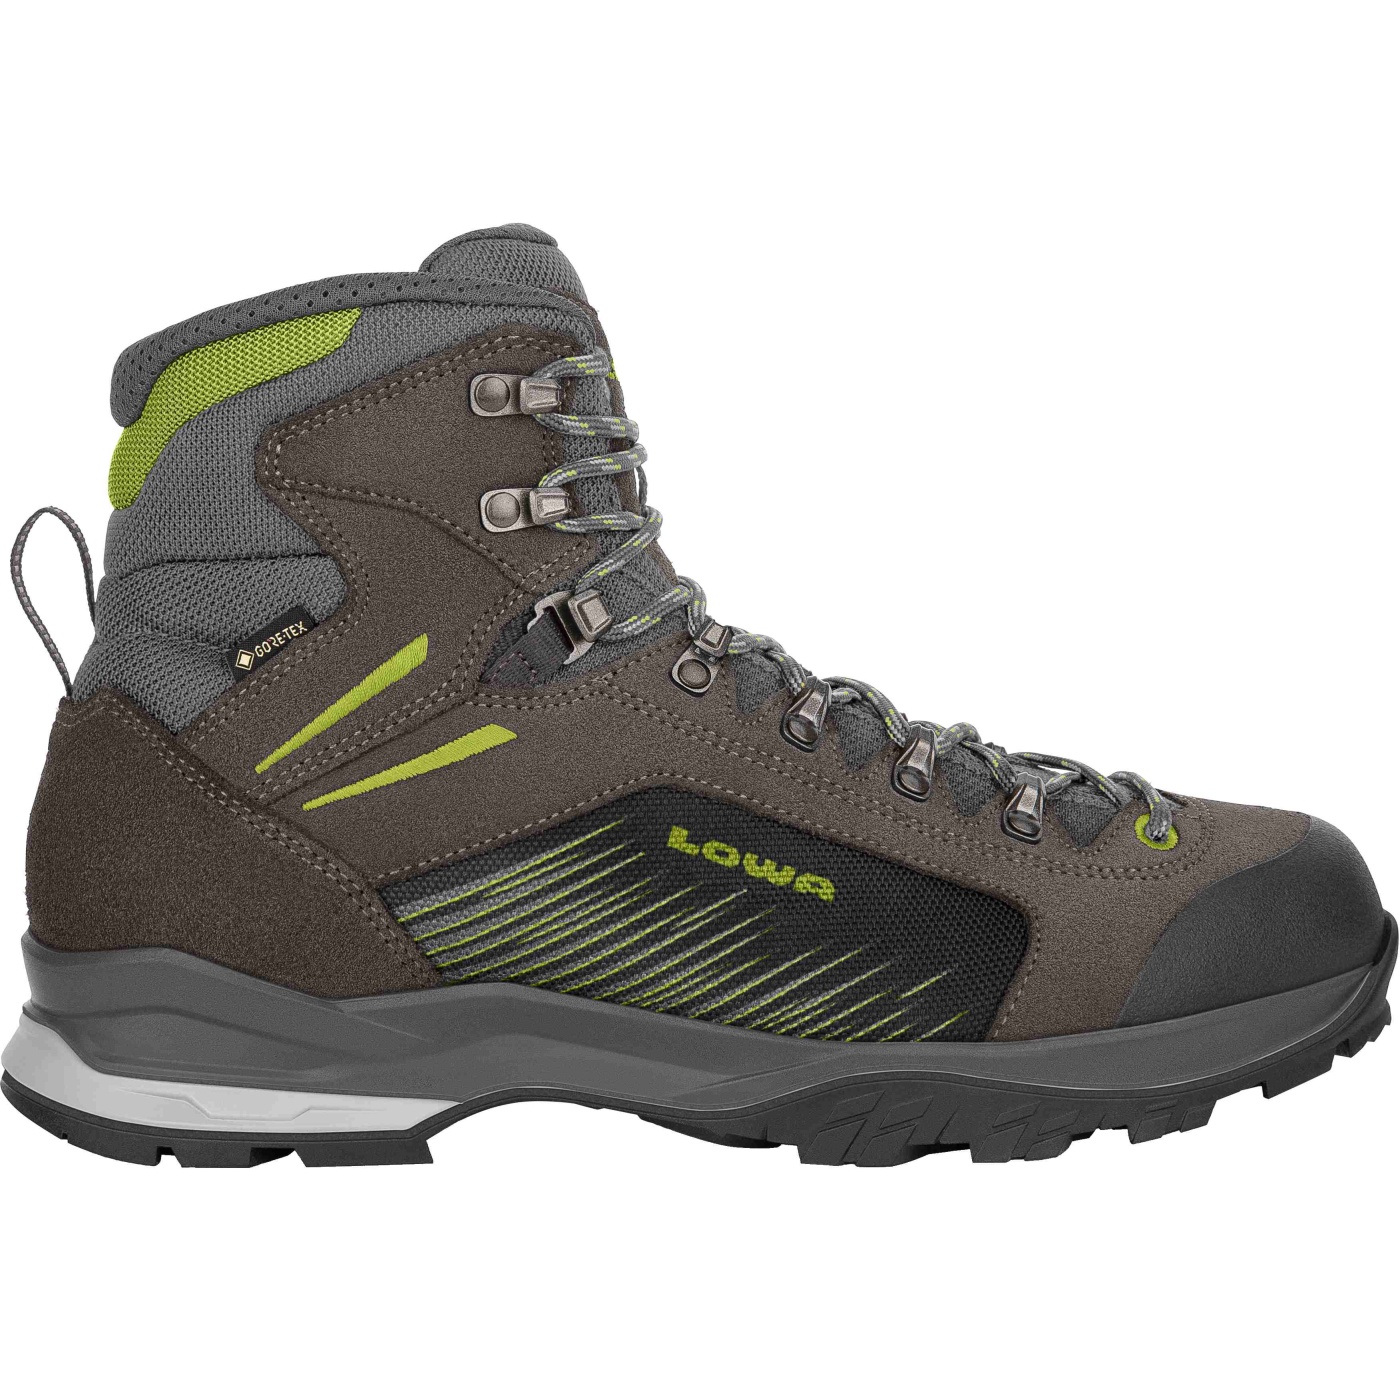 Productfoto van LOWA Vigo GTX Trekking Shoes - graphite/lime